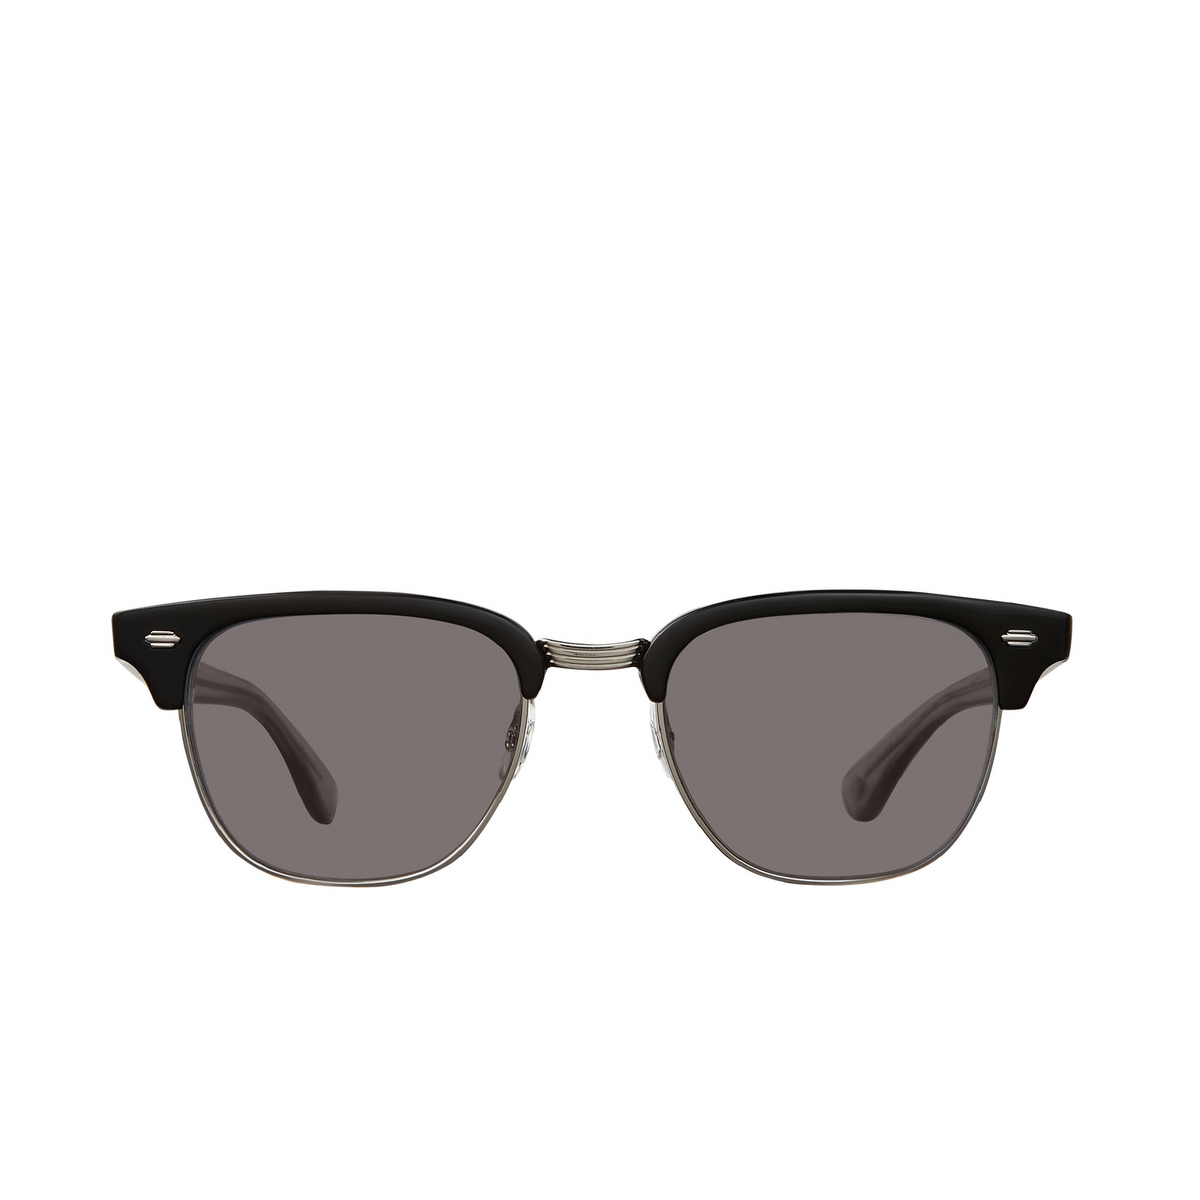 Garrett Leight ELKGROVE Sunglasses BK-S/GRY Black-Silver/Grey - front view